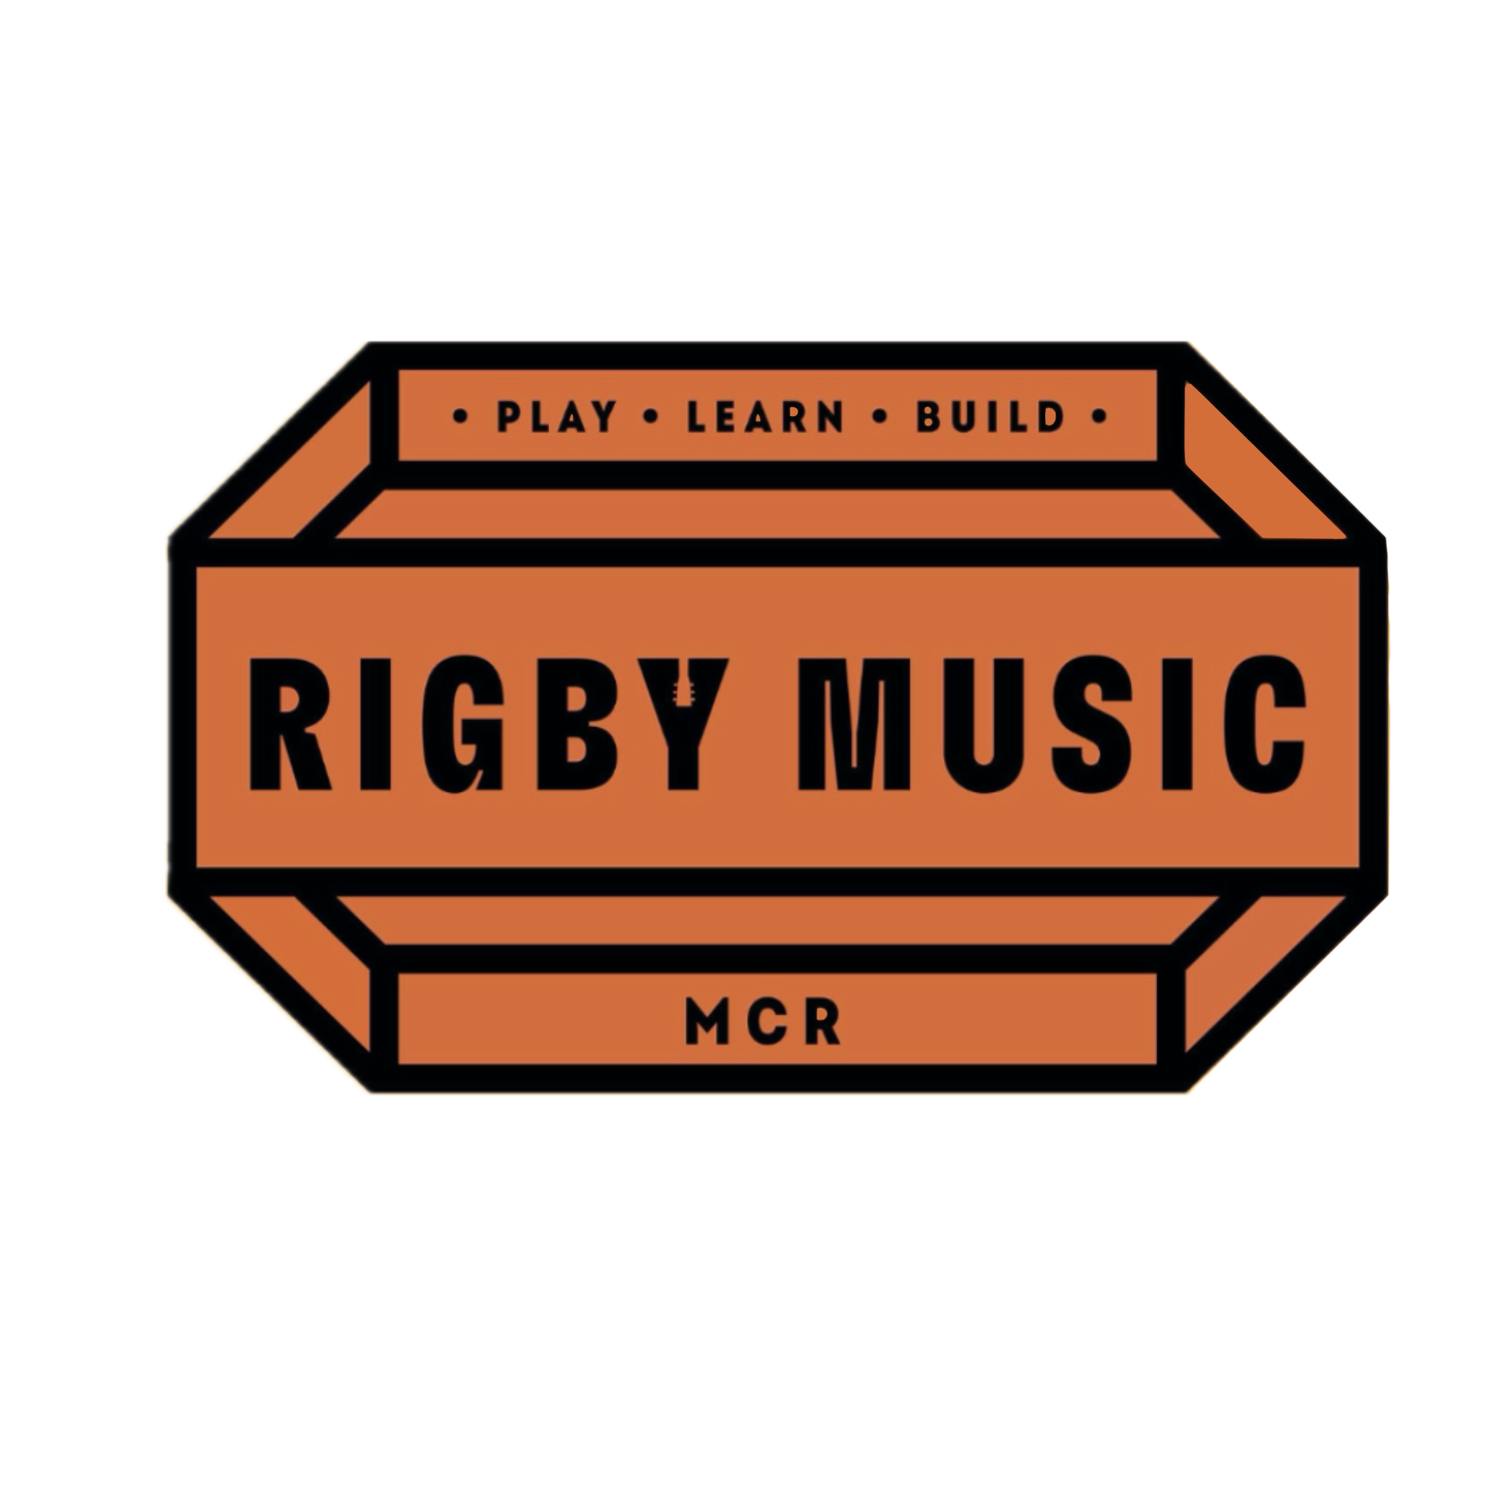 RIGBY MUSIC LEARN